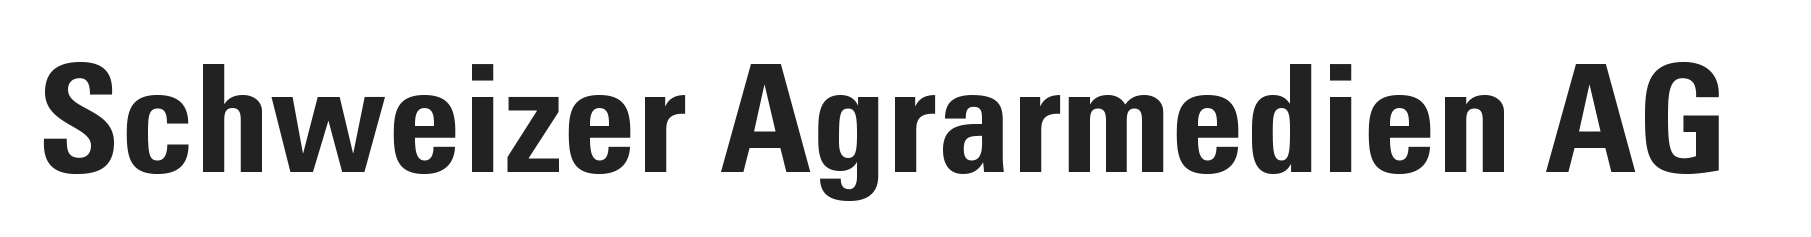 Schweizer Agrarmedien AG